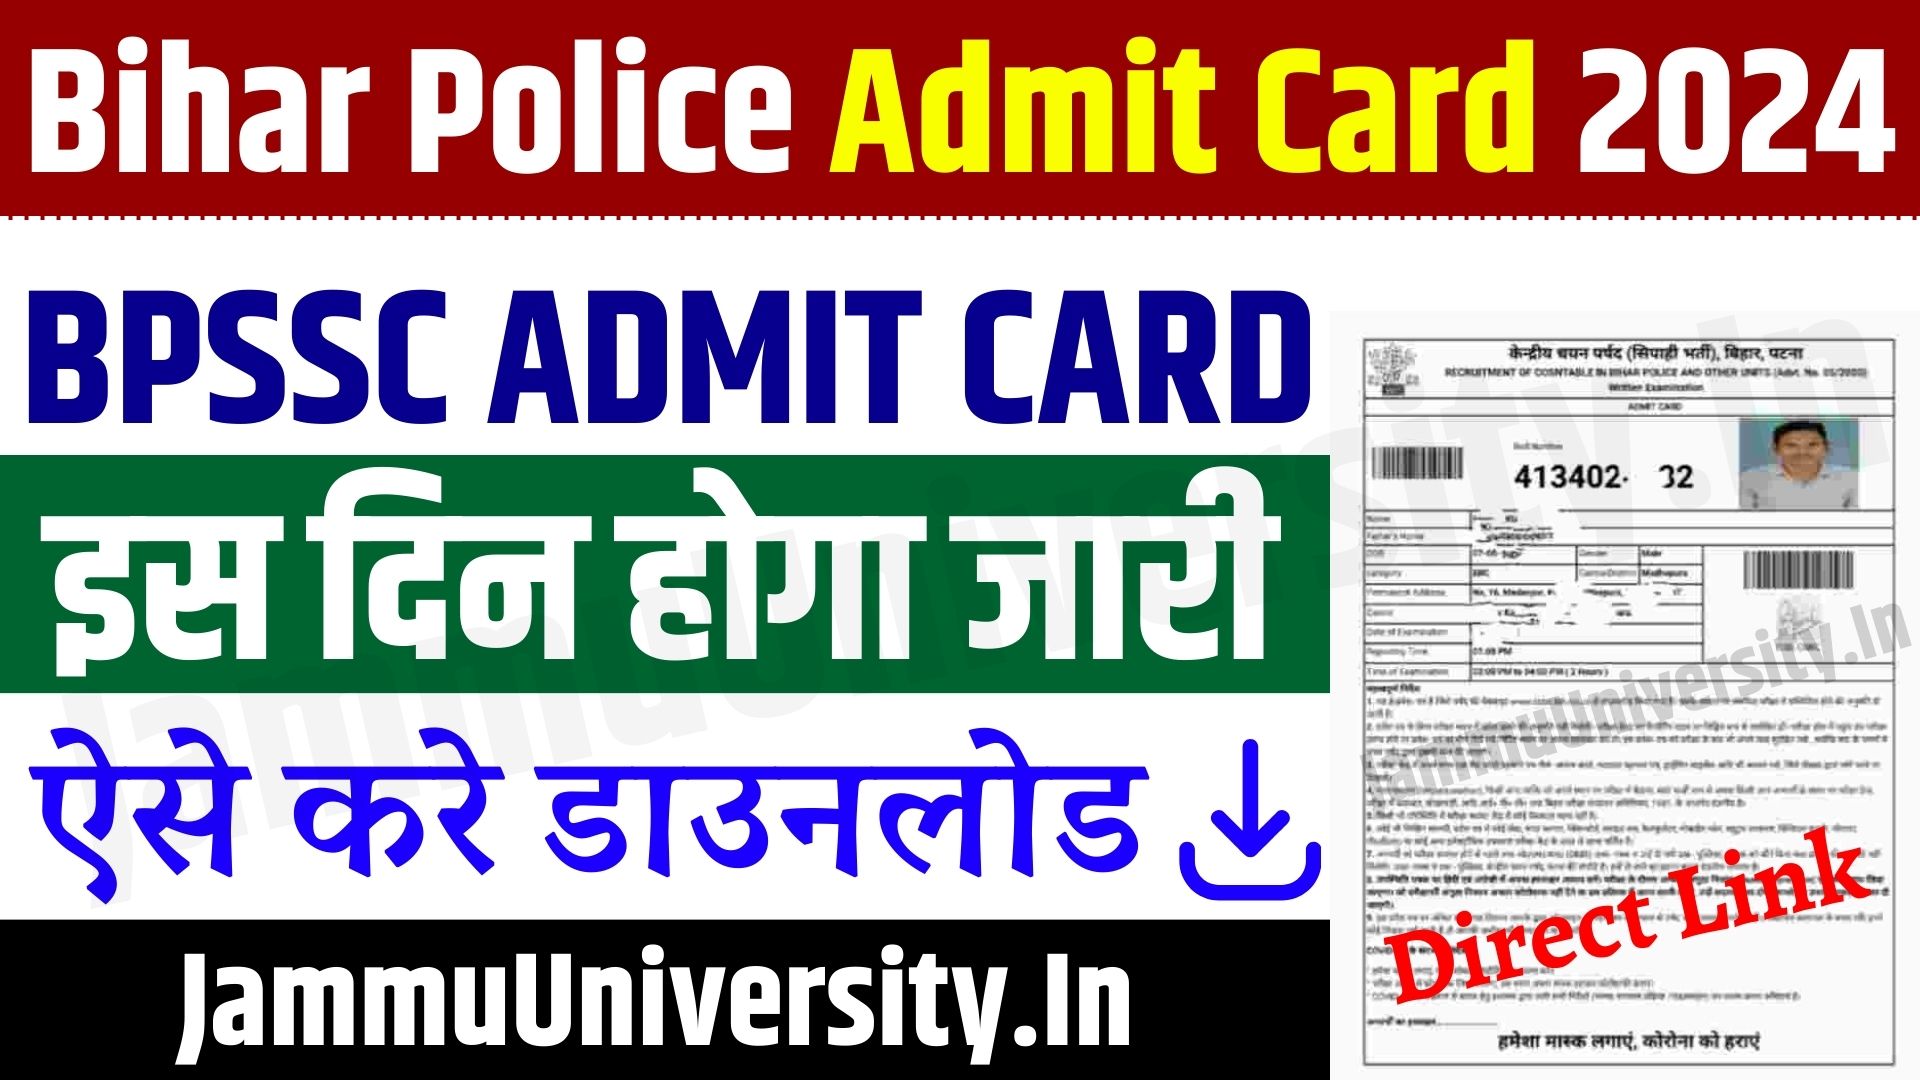 Bihar Police Admit Card 2024